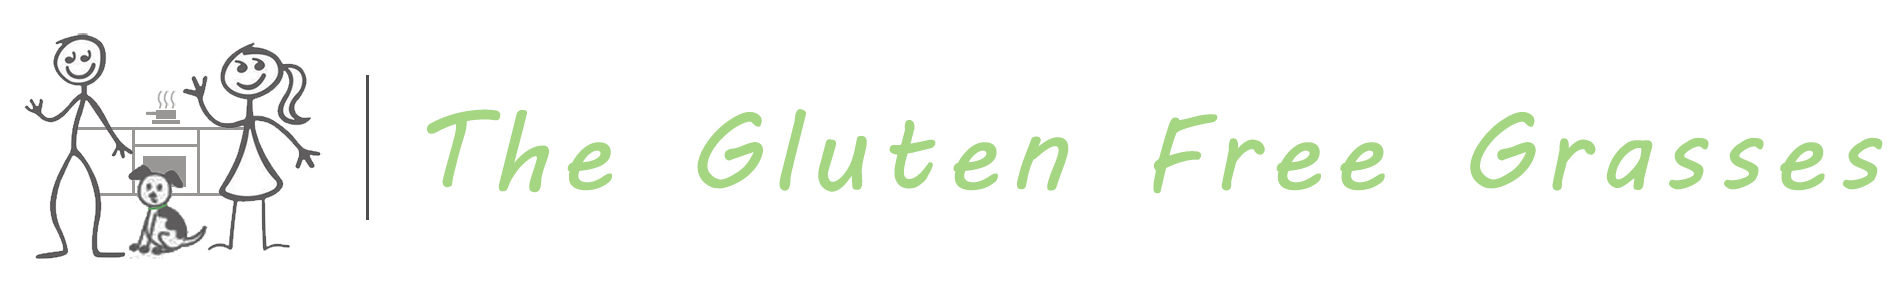 https://glutenfreegrasses.com/wp-content/uploads/2019/12/cropped-Gluten-Free-Grasses-3.jpg